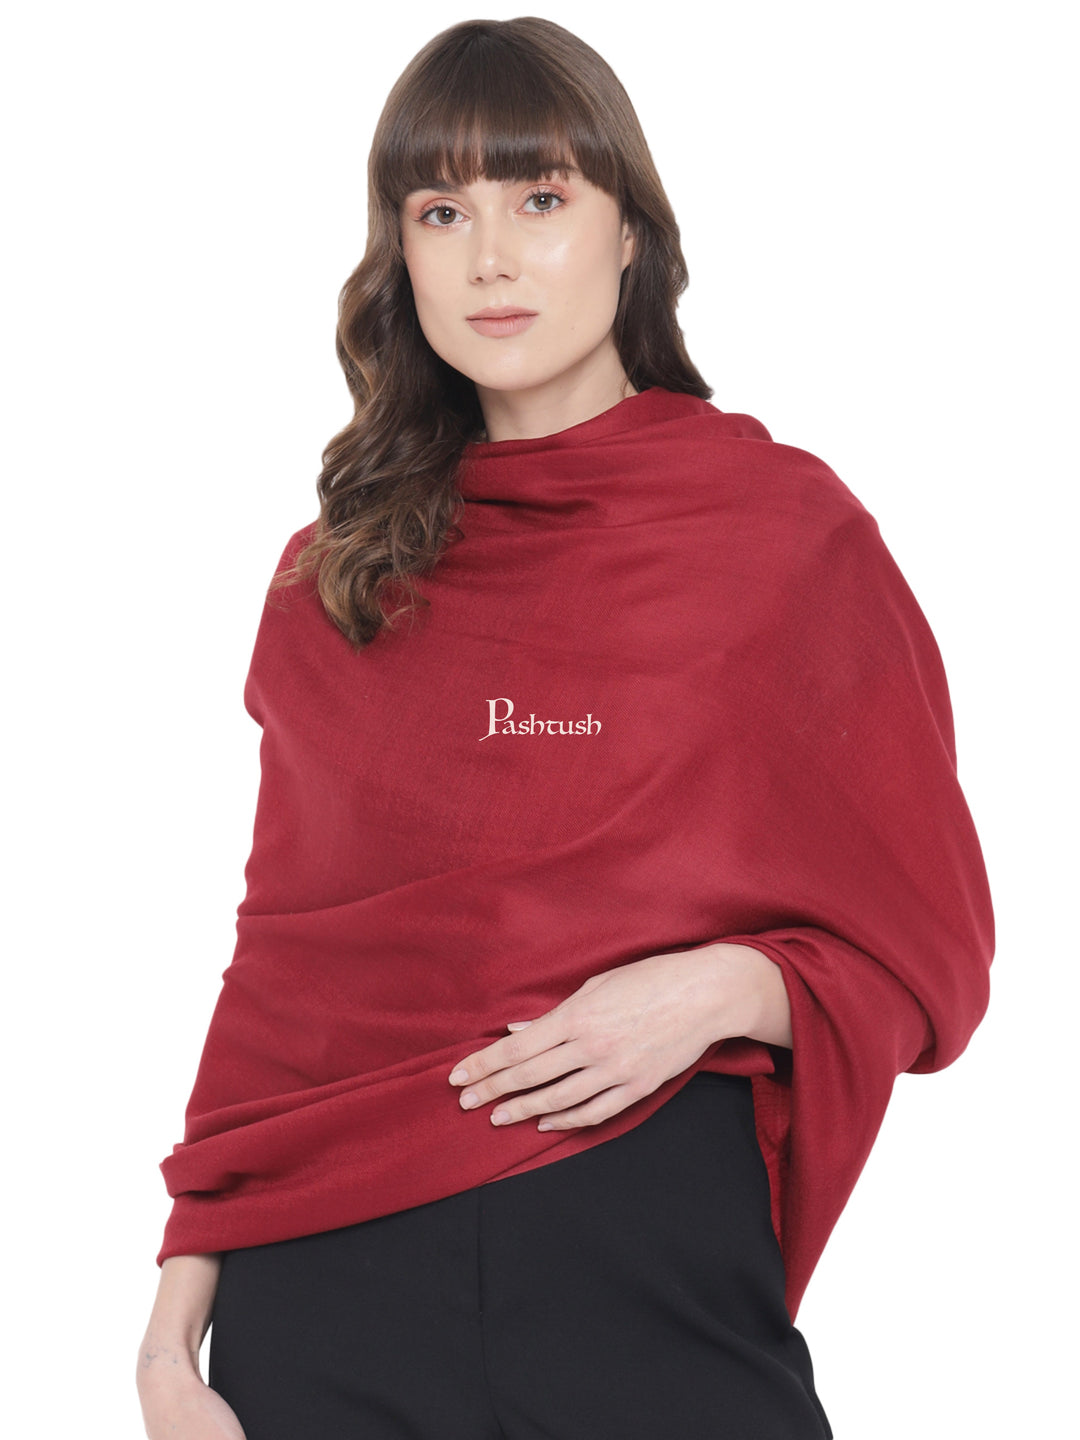 Pashtush Womens Fine Wool Shawl, Extra Soft Warm - Light Weight, Solid Crimson